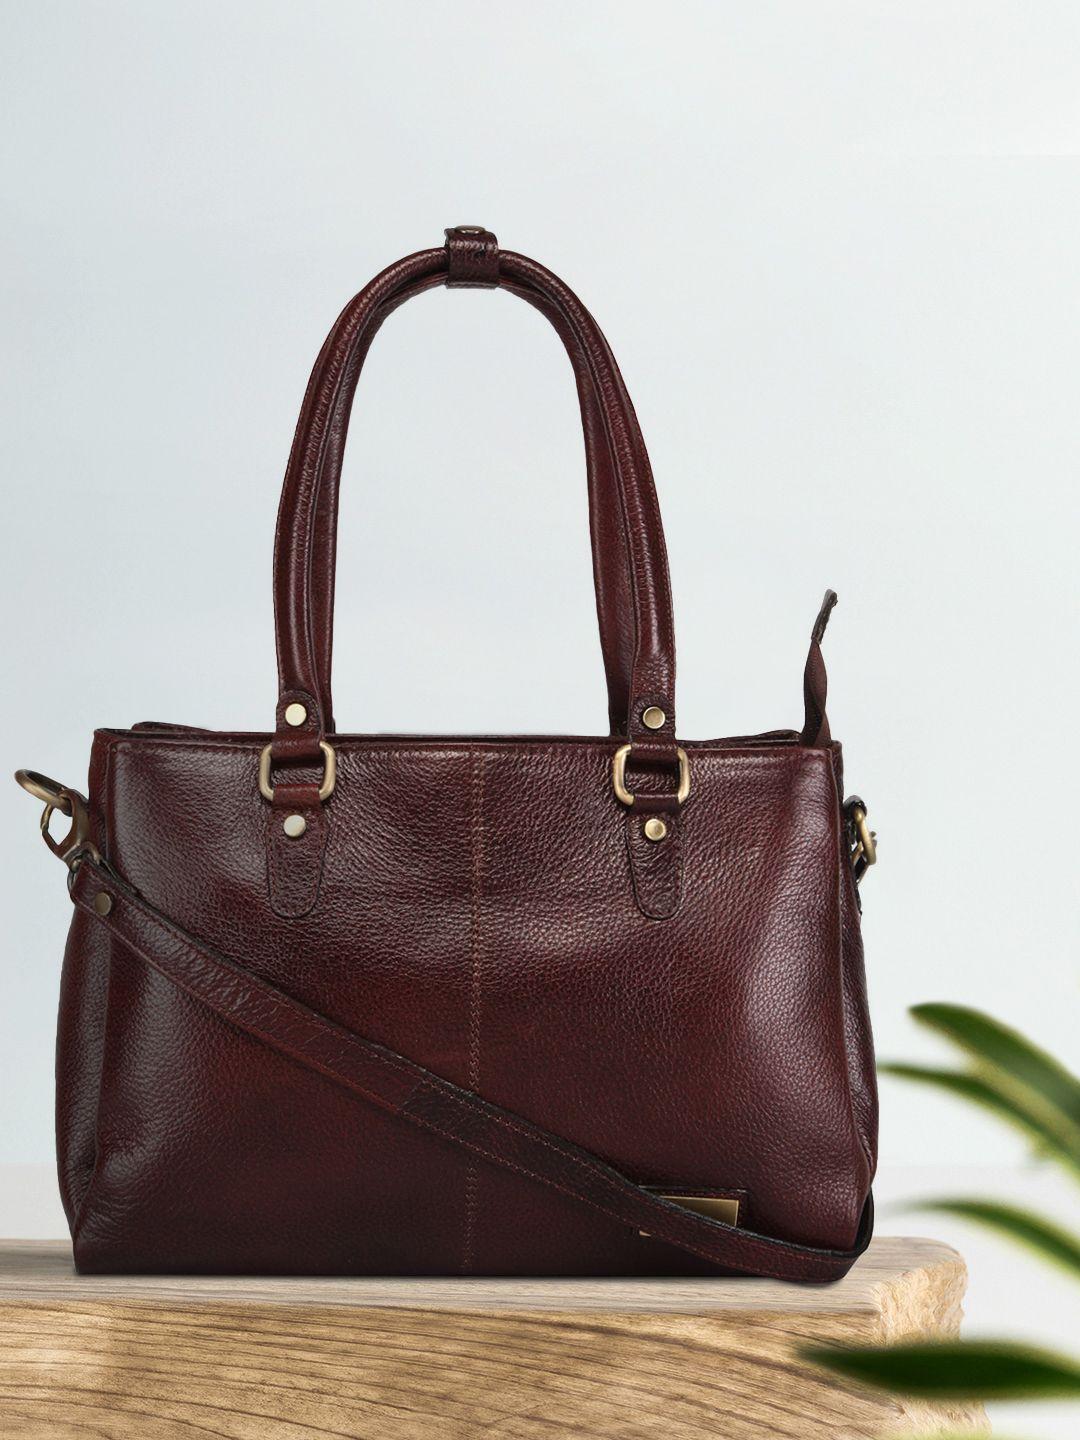 genwayne women brown leather structured handheld bag